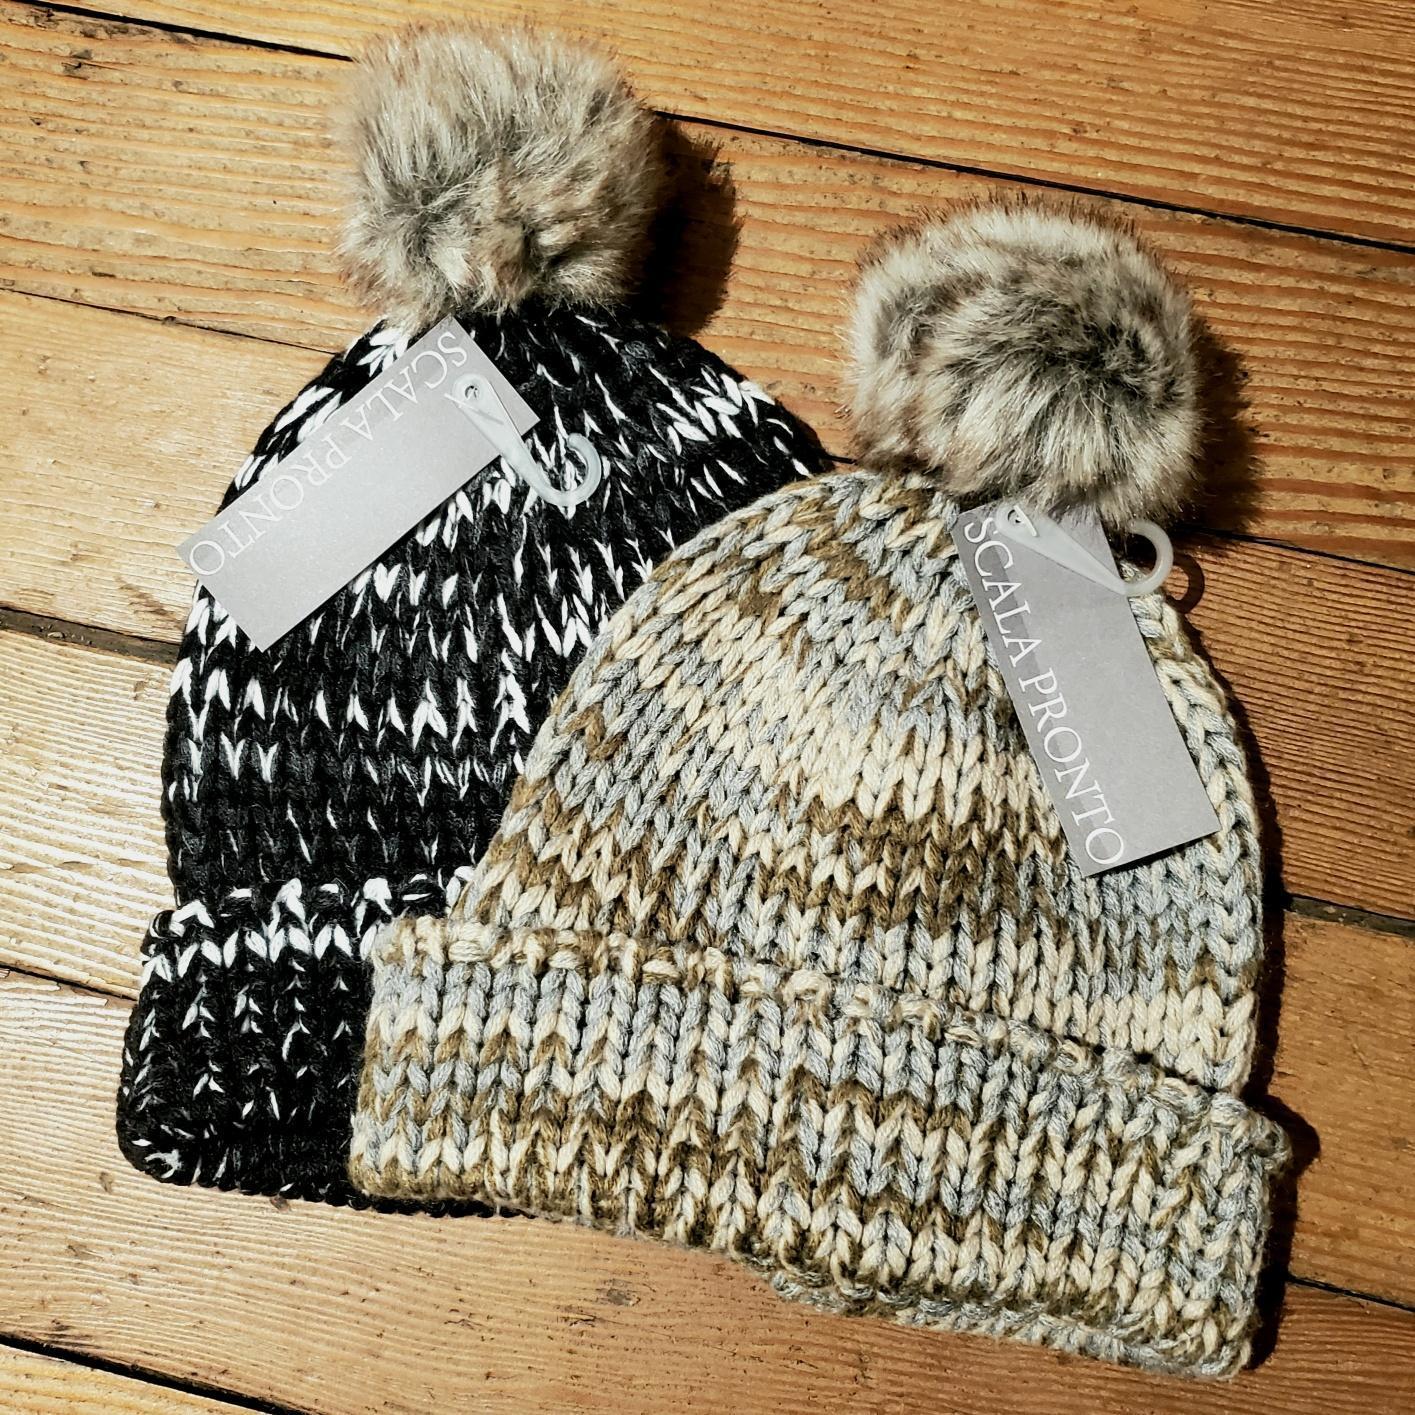 Multi-tone knit beanie